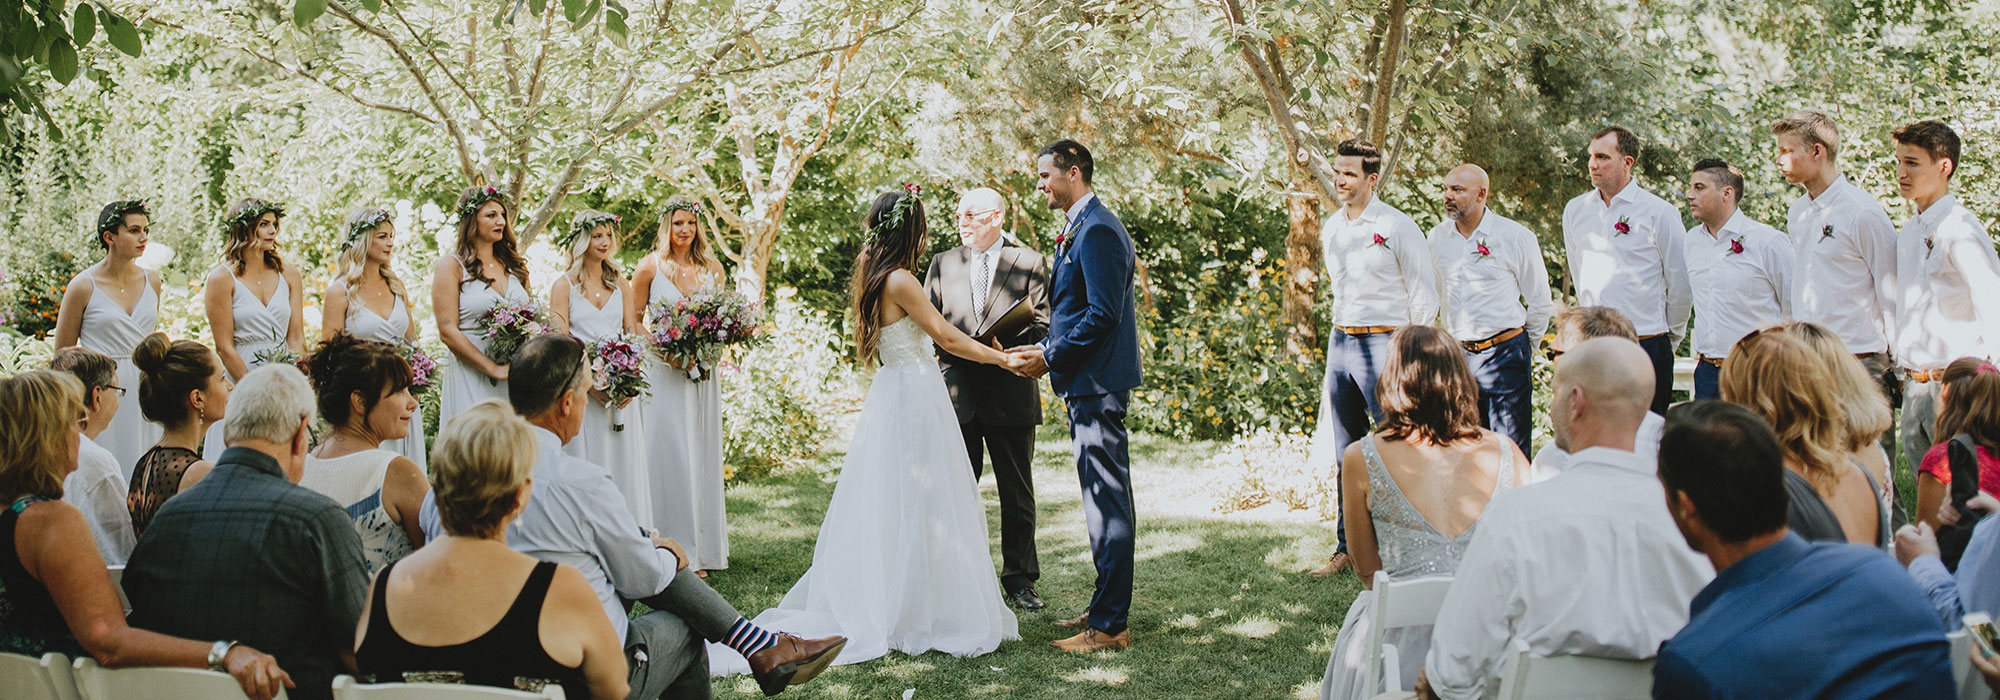 wedding ceremony at linden gardens